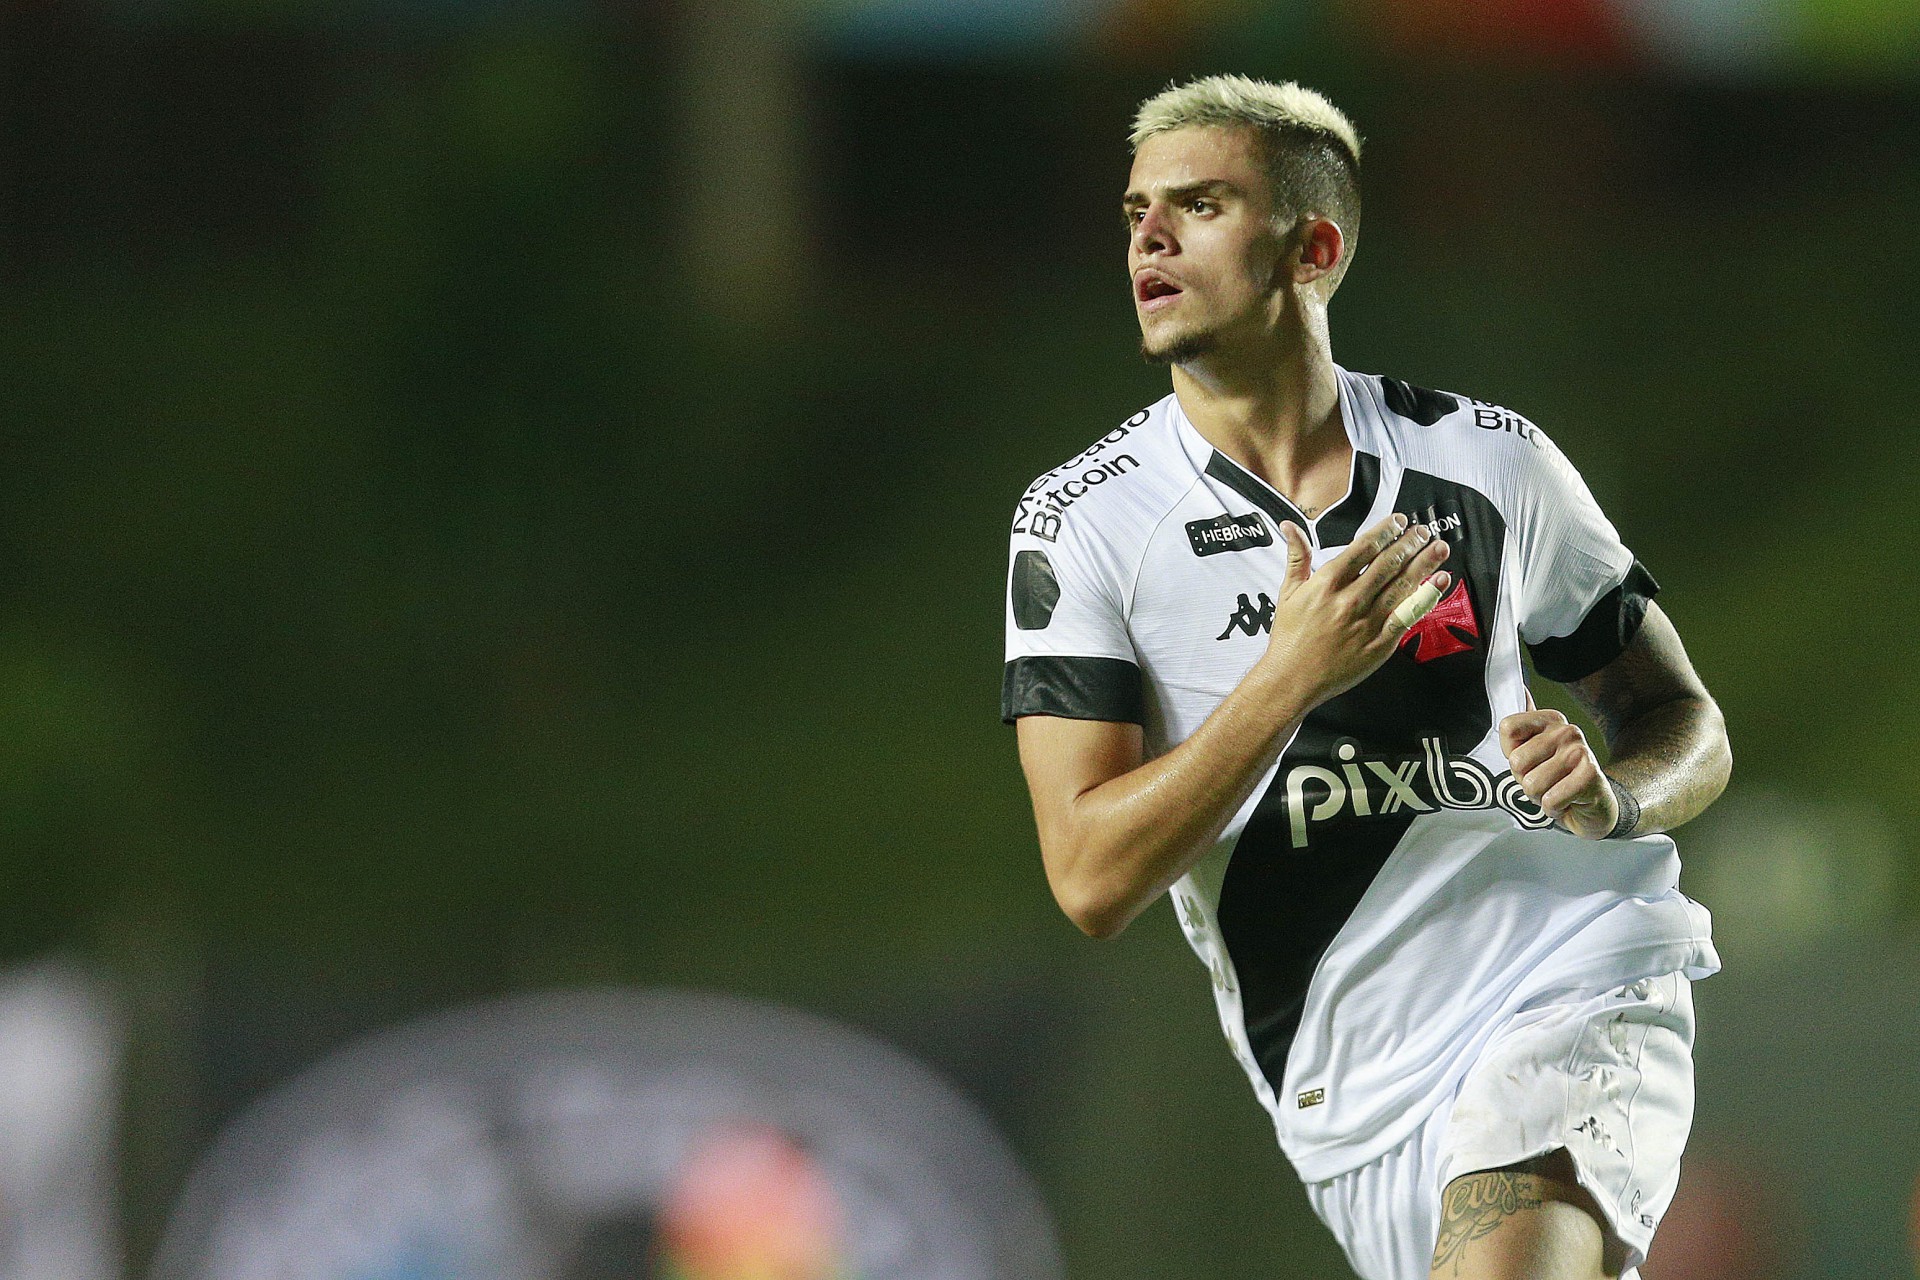 Gabriel Pec comemora gol marcado na partida entre Vasco e Volta Redonda - FOTO: Daniel RAMALHO/VASCO